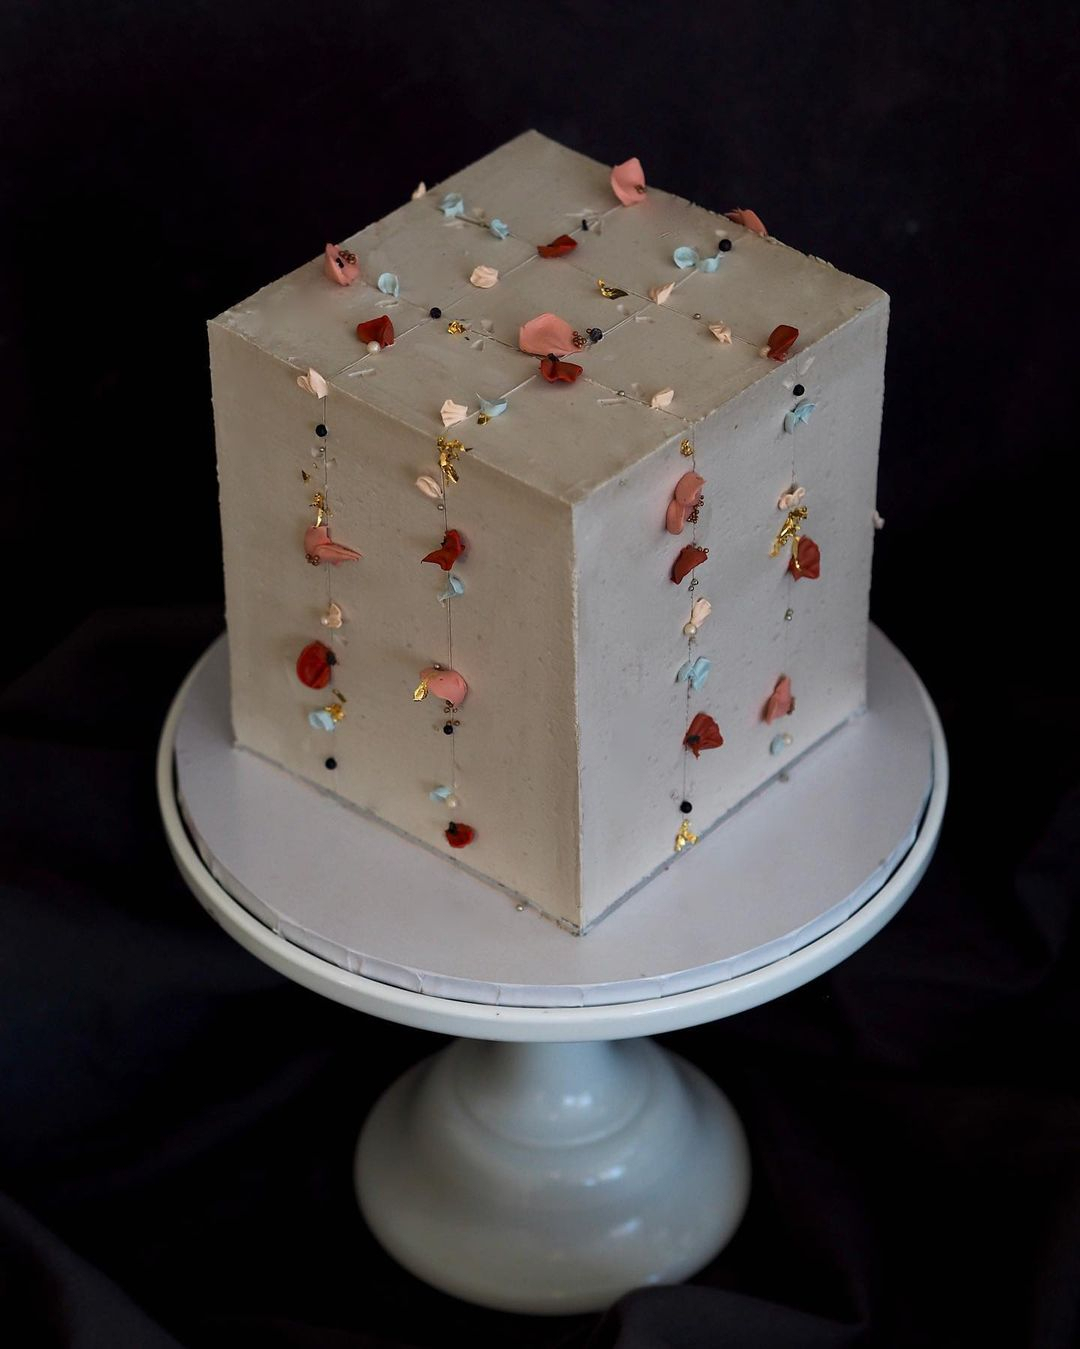 Cake Art - The Sugar Bling - Wedding Cake - Janakpuri - Weddingwire.in